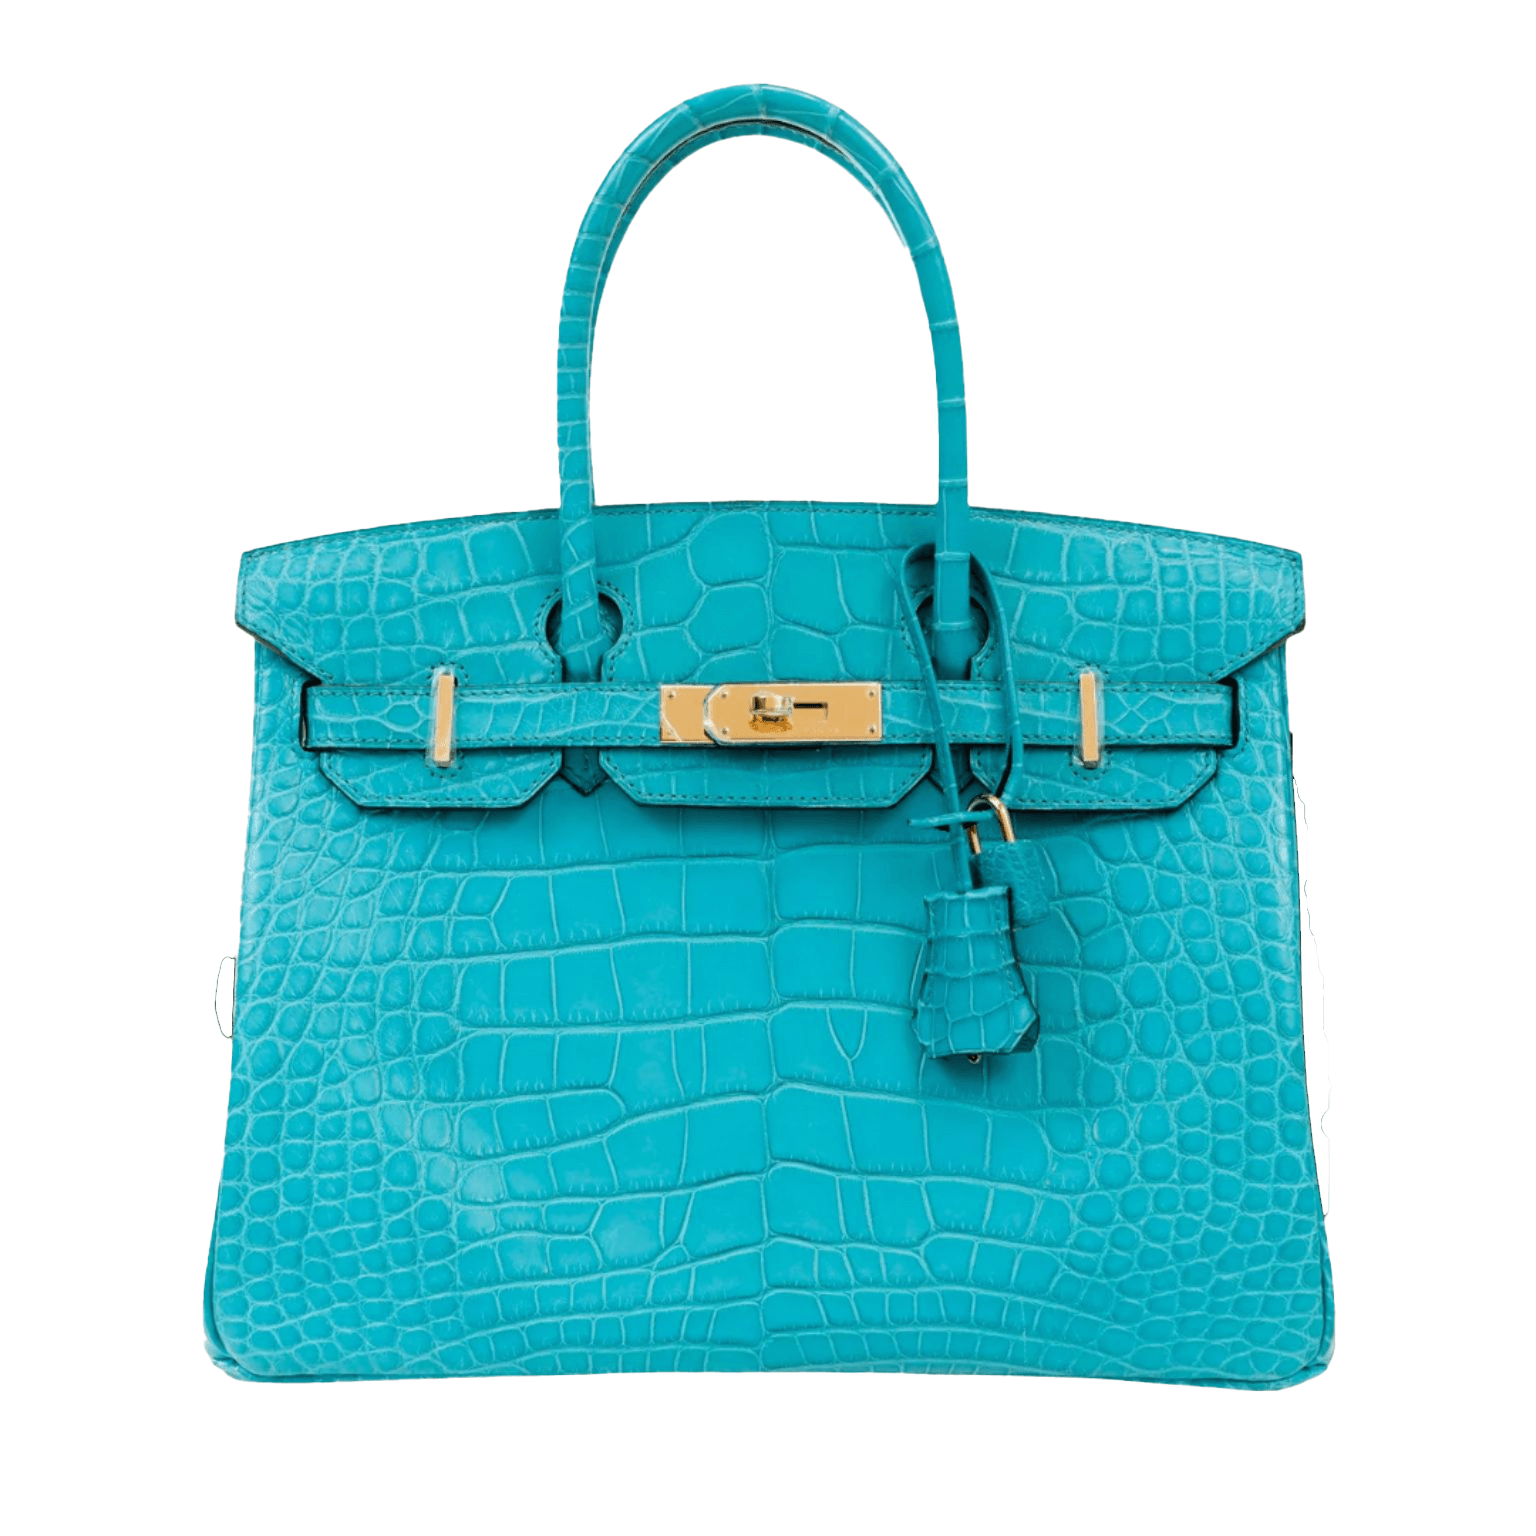 Shop the exclusive and rare Hermès 30cm Blue Peon Crocodile Birkin